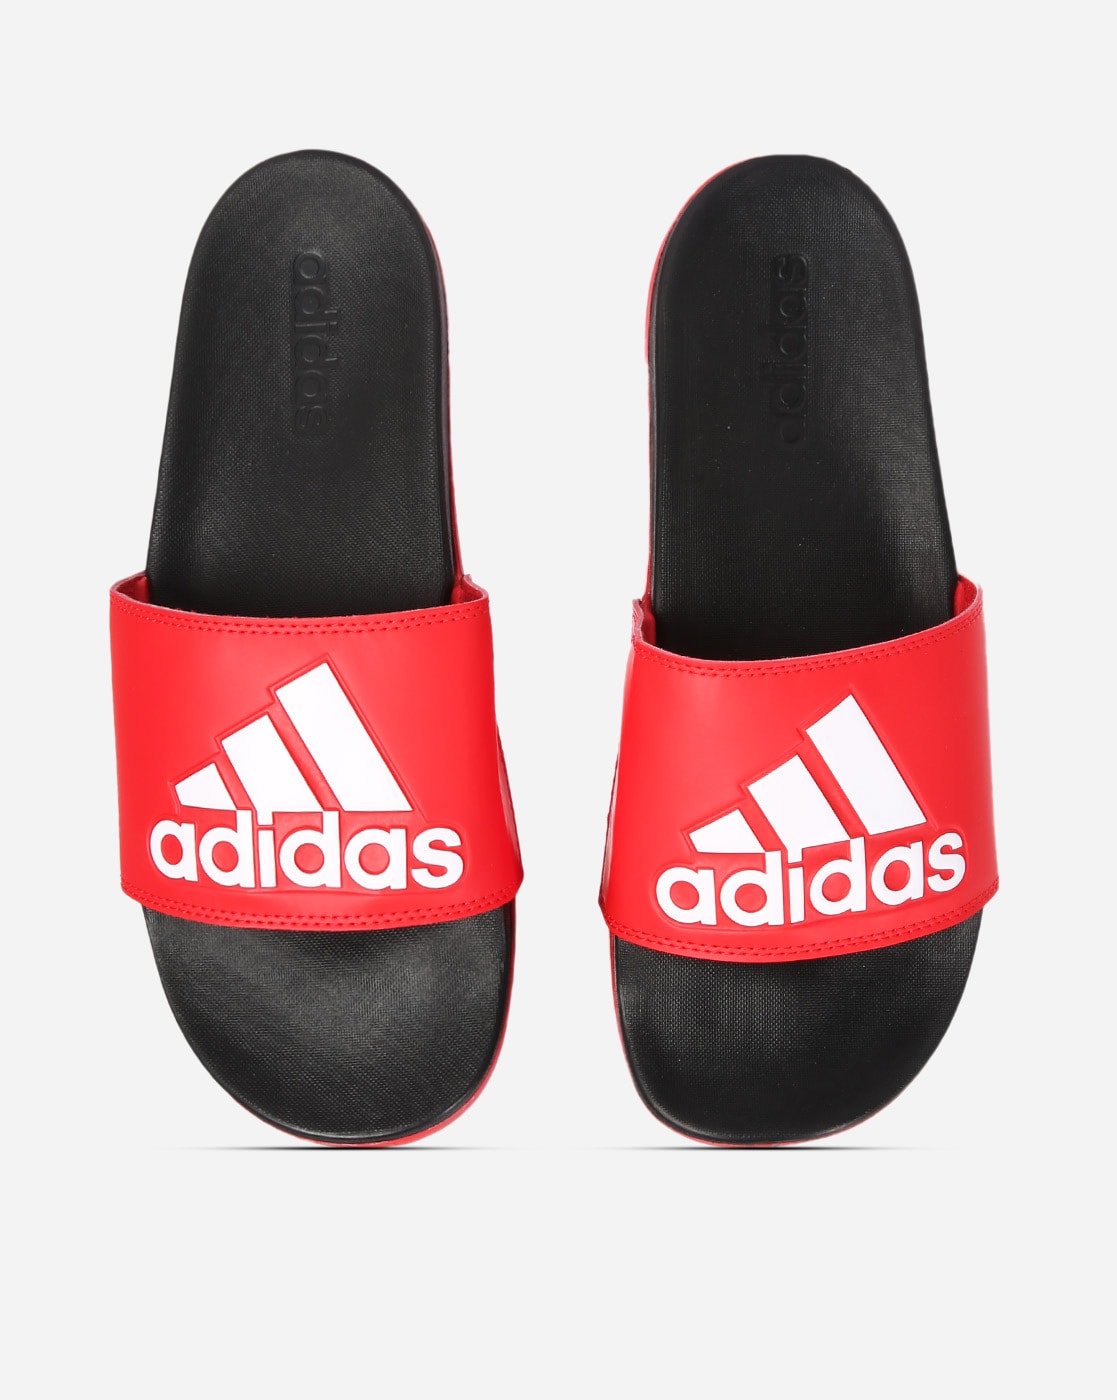 adidas Duramo Slide Black White Men Unisex Sports Sandals Slippers G15890 |  eBay